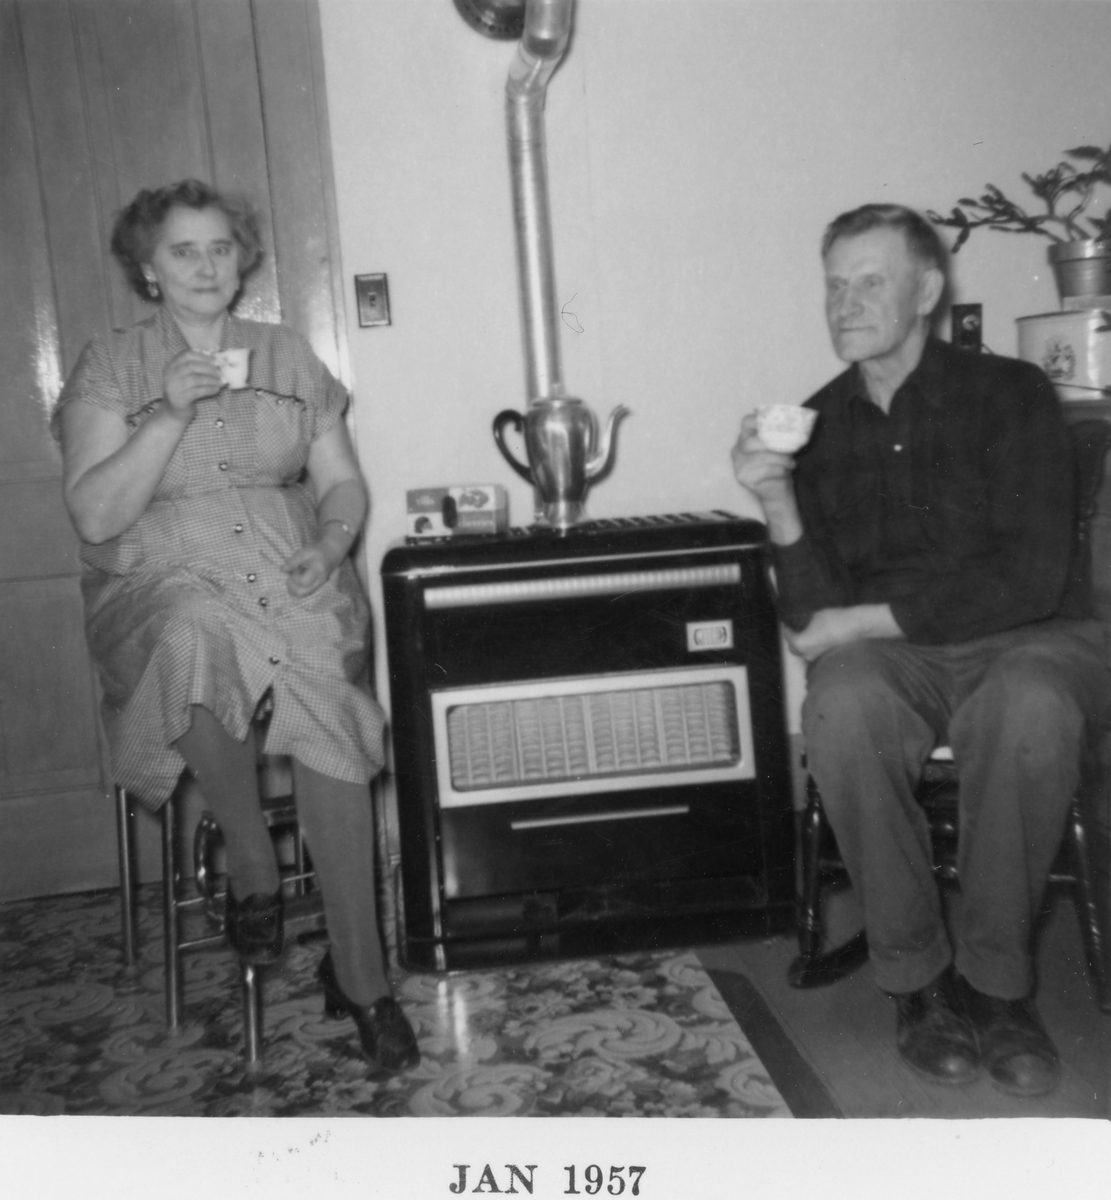 Mann og kvinne foran radioapparat